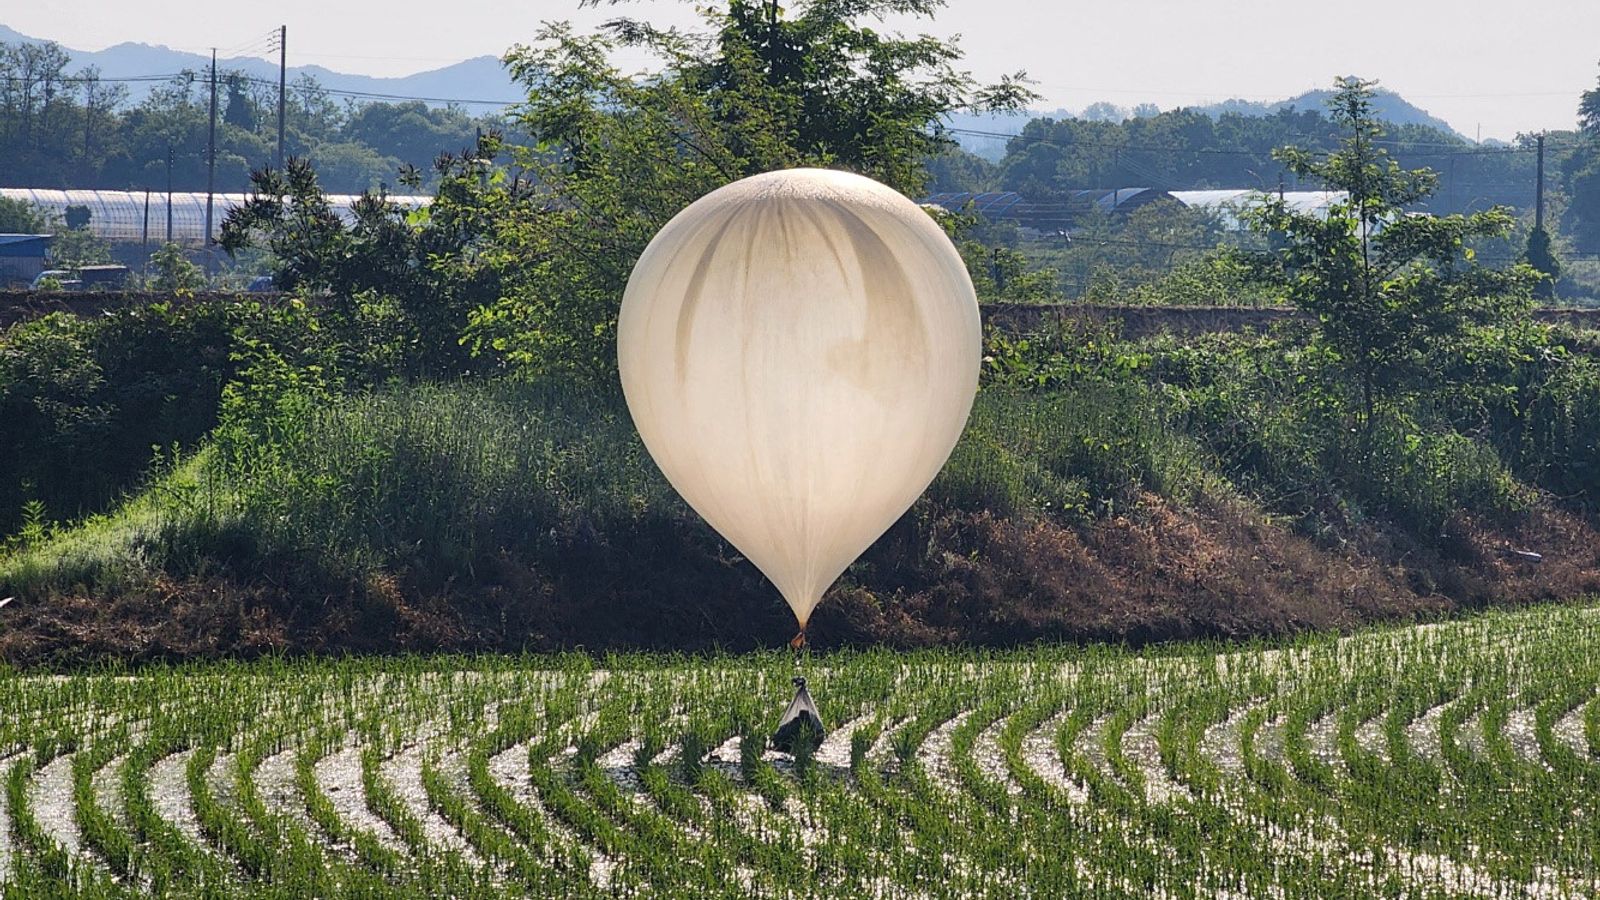 North Korea flies hundreds more balloons containing filth towards South Korea